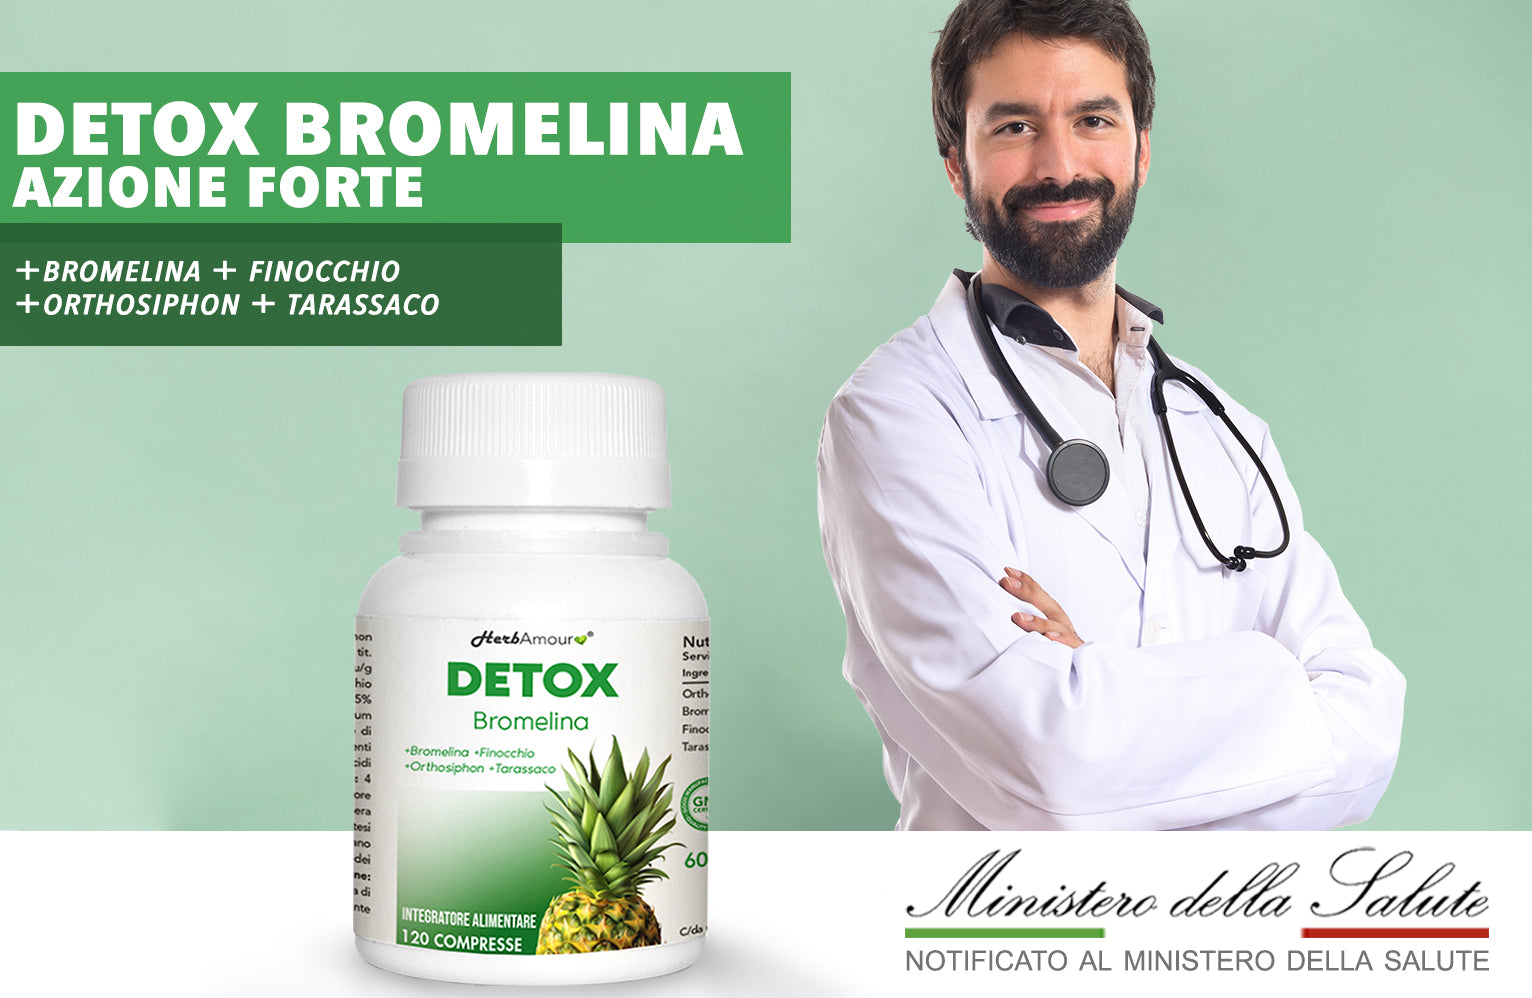 HerbAmour® Bromelina